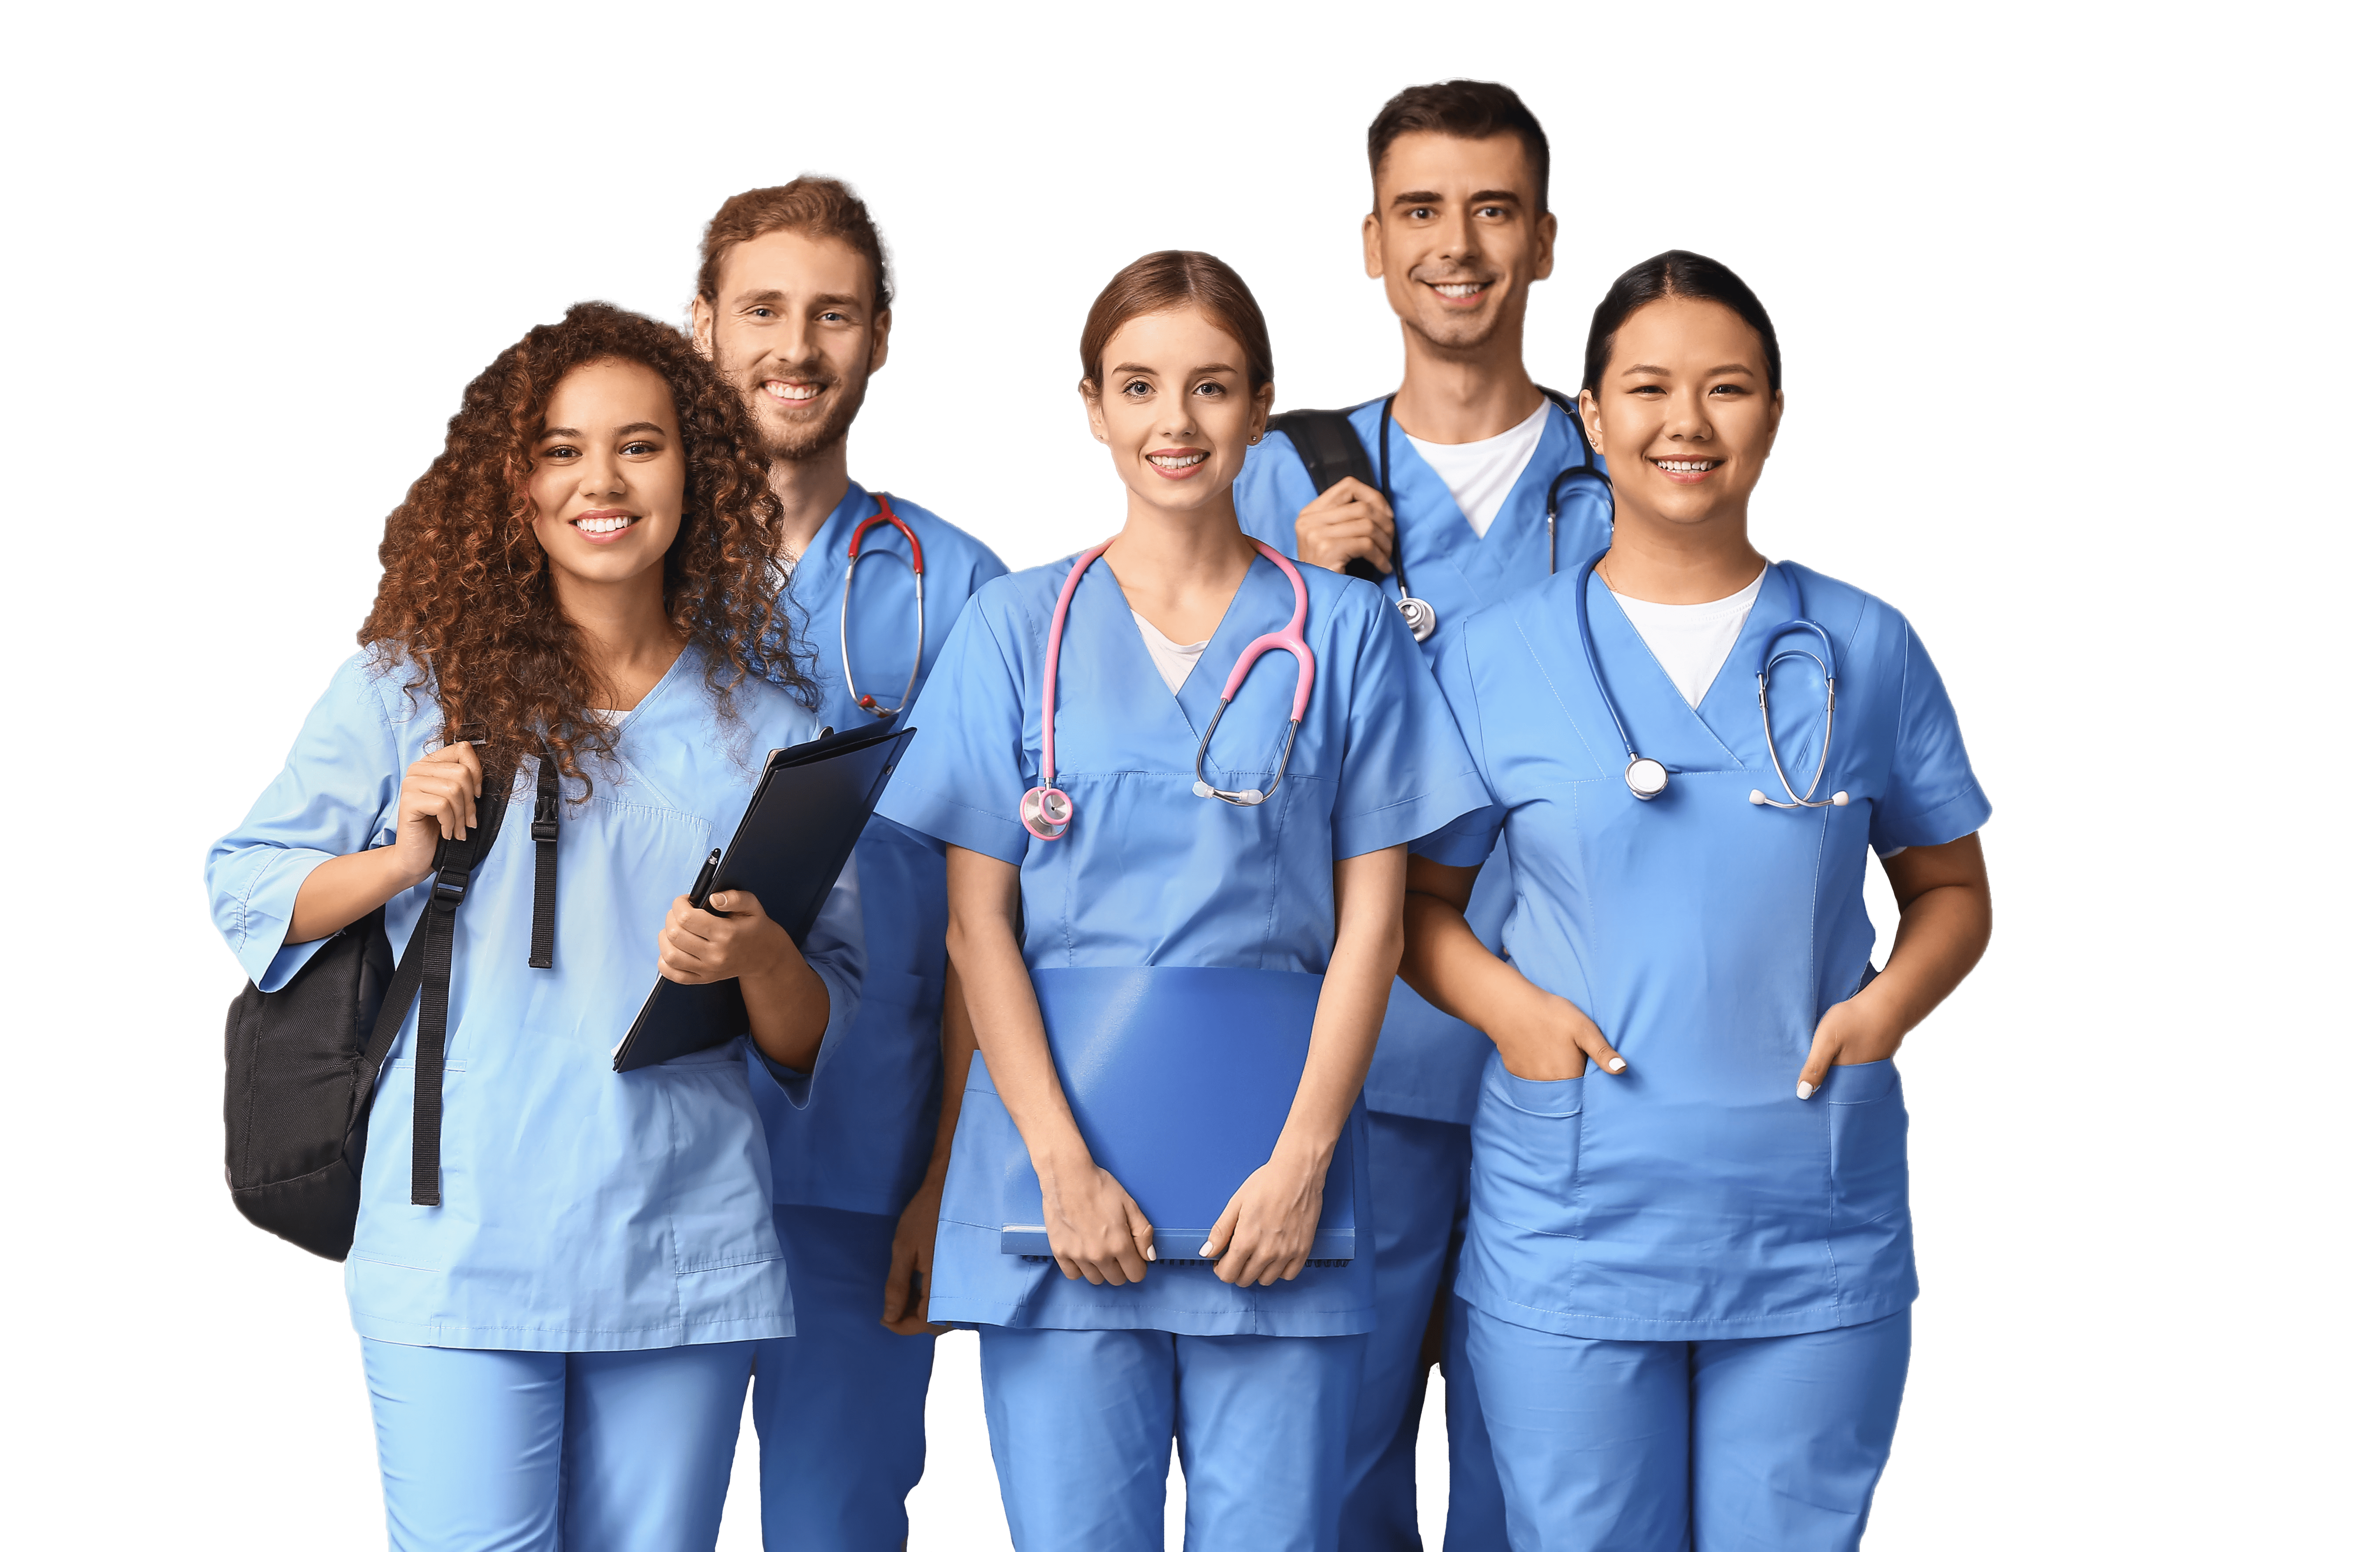 Group of smiling nurses